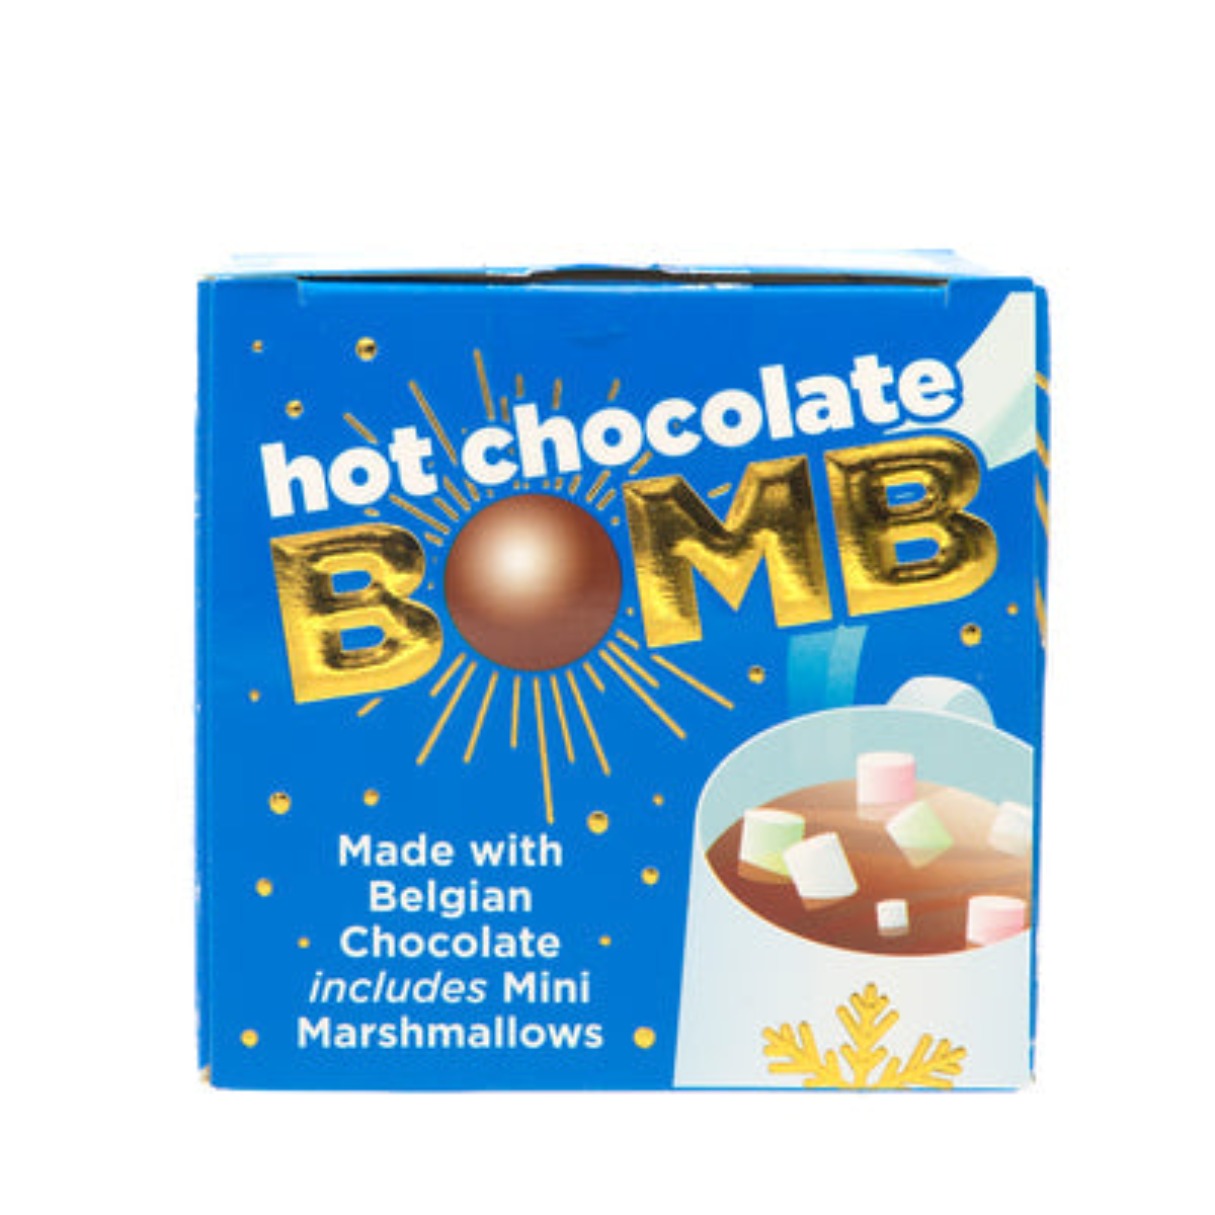 Frankford Hot Chocolate Bomb 1.6oz - 12ct